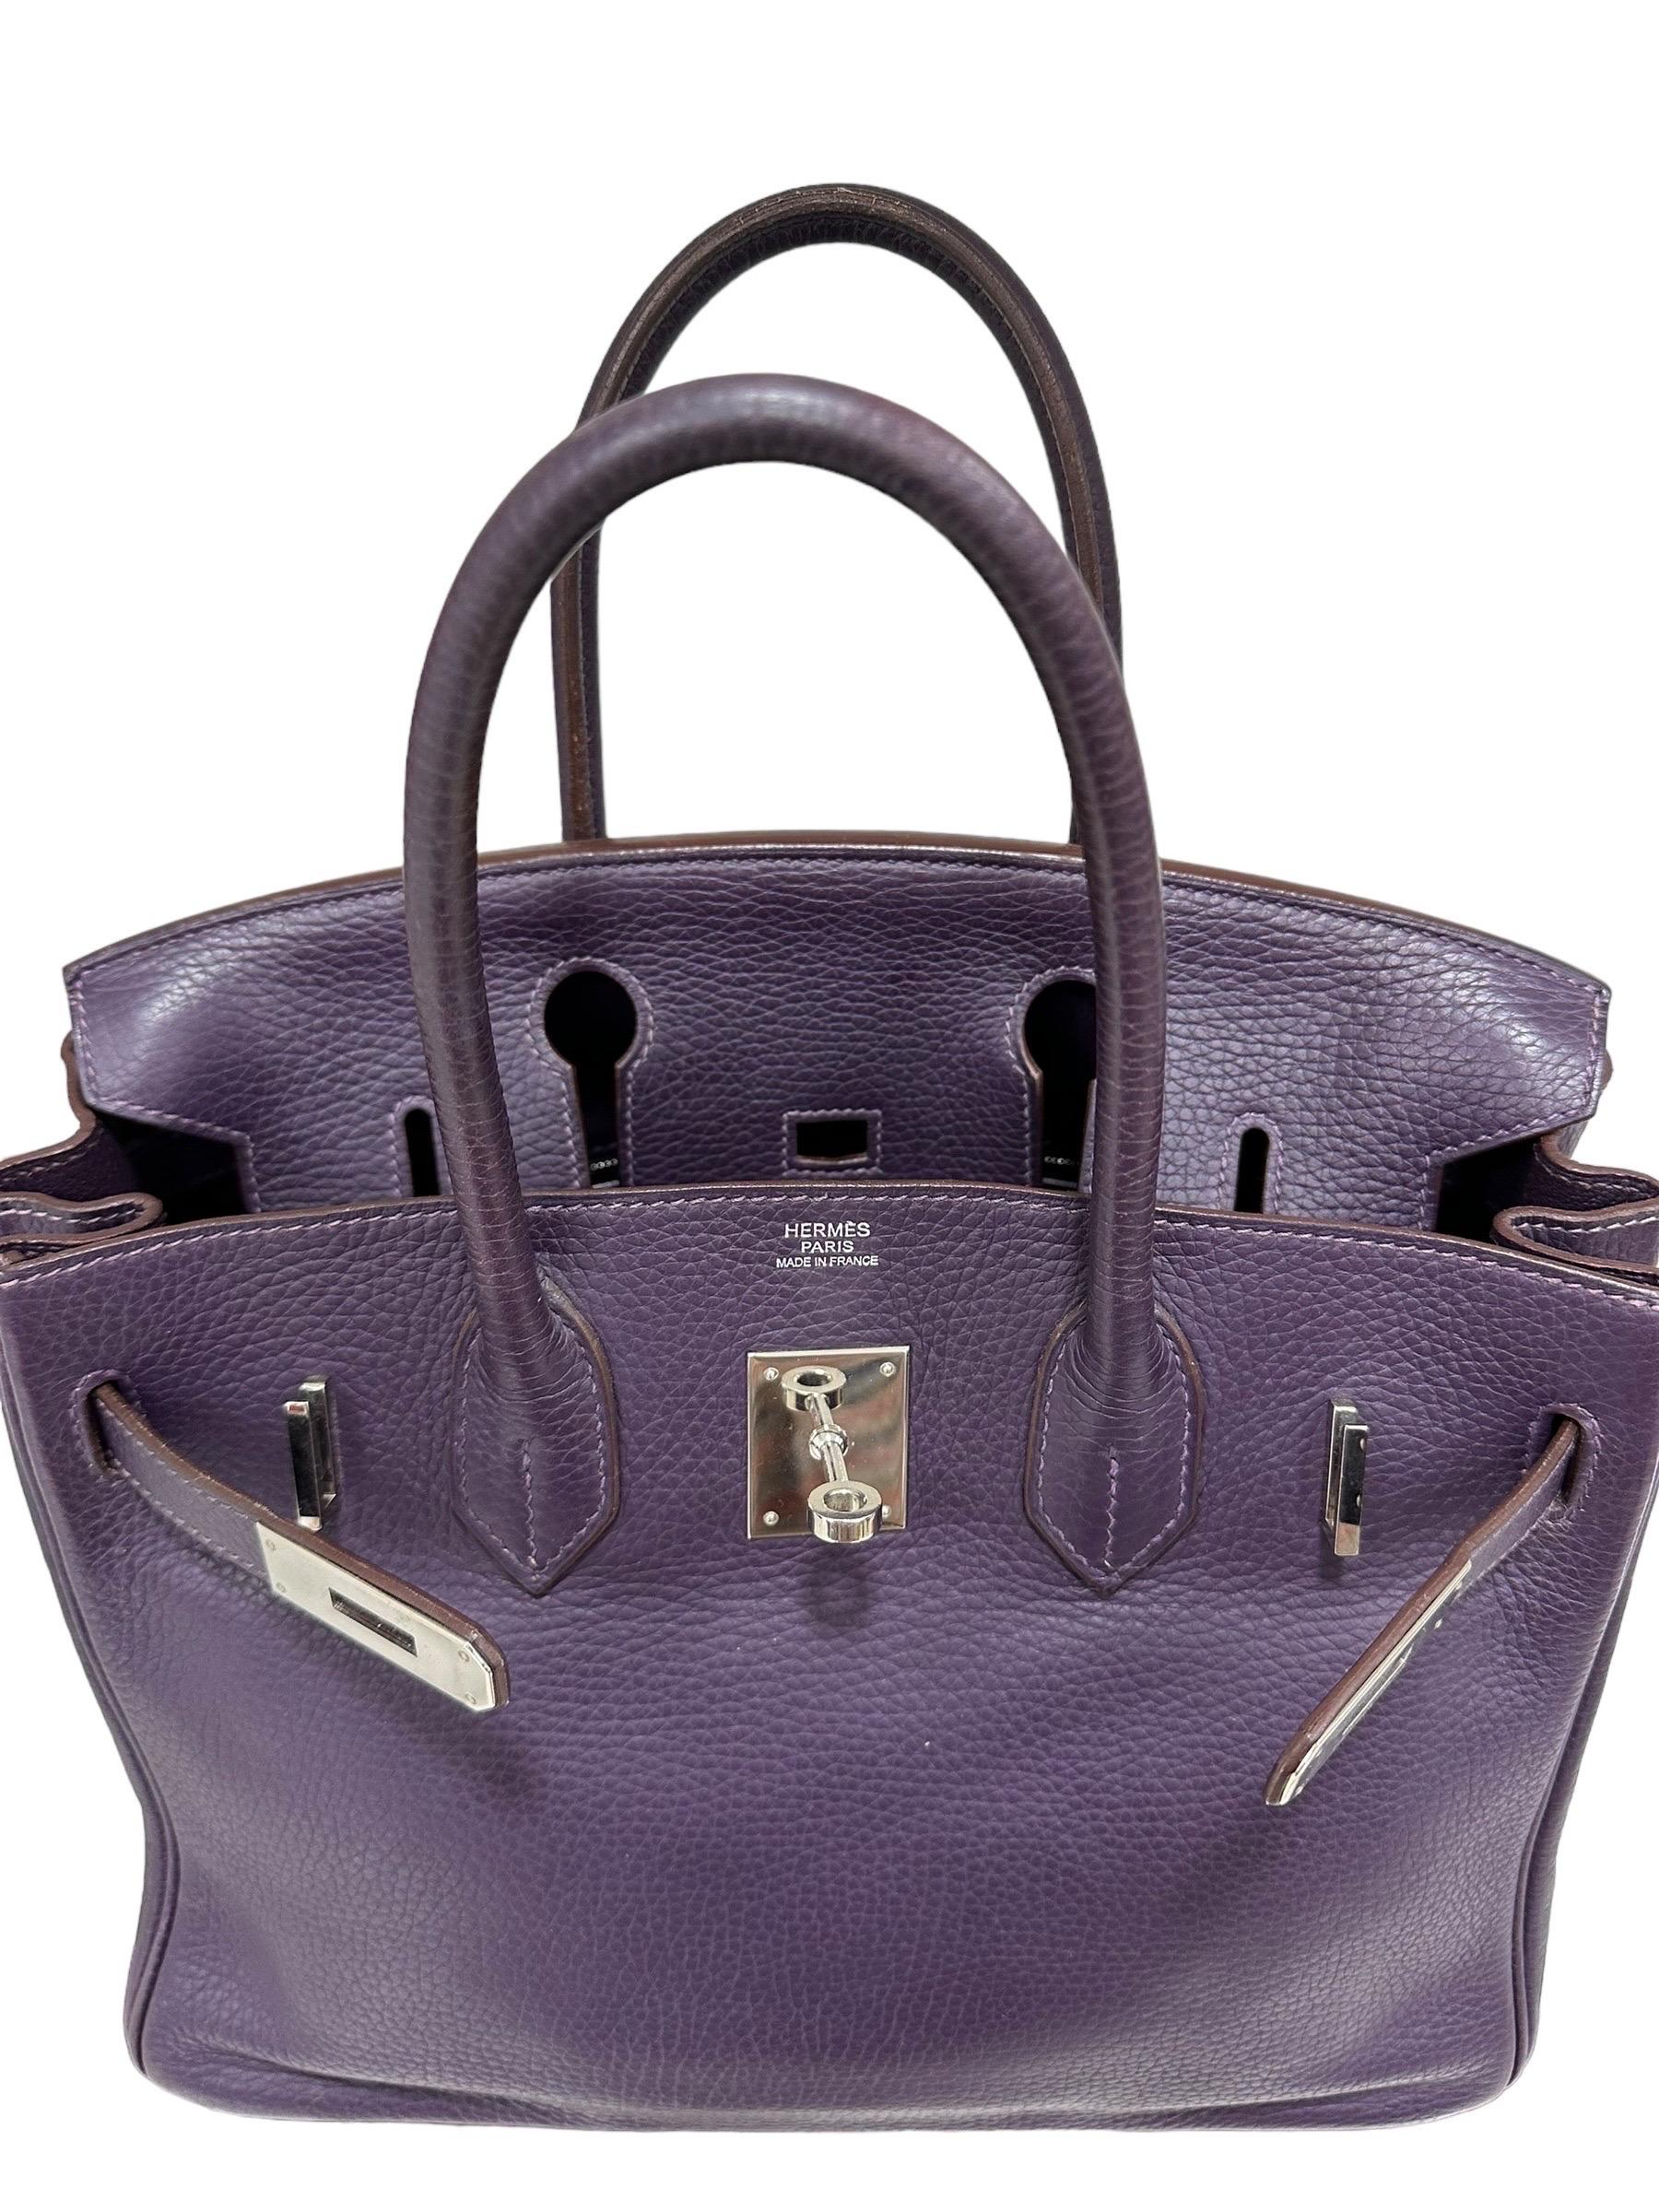 2007 Hermès Birkin 30 Clemence Leather Violet Raisin Top Handle Bag For Sale 11